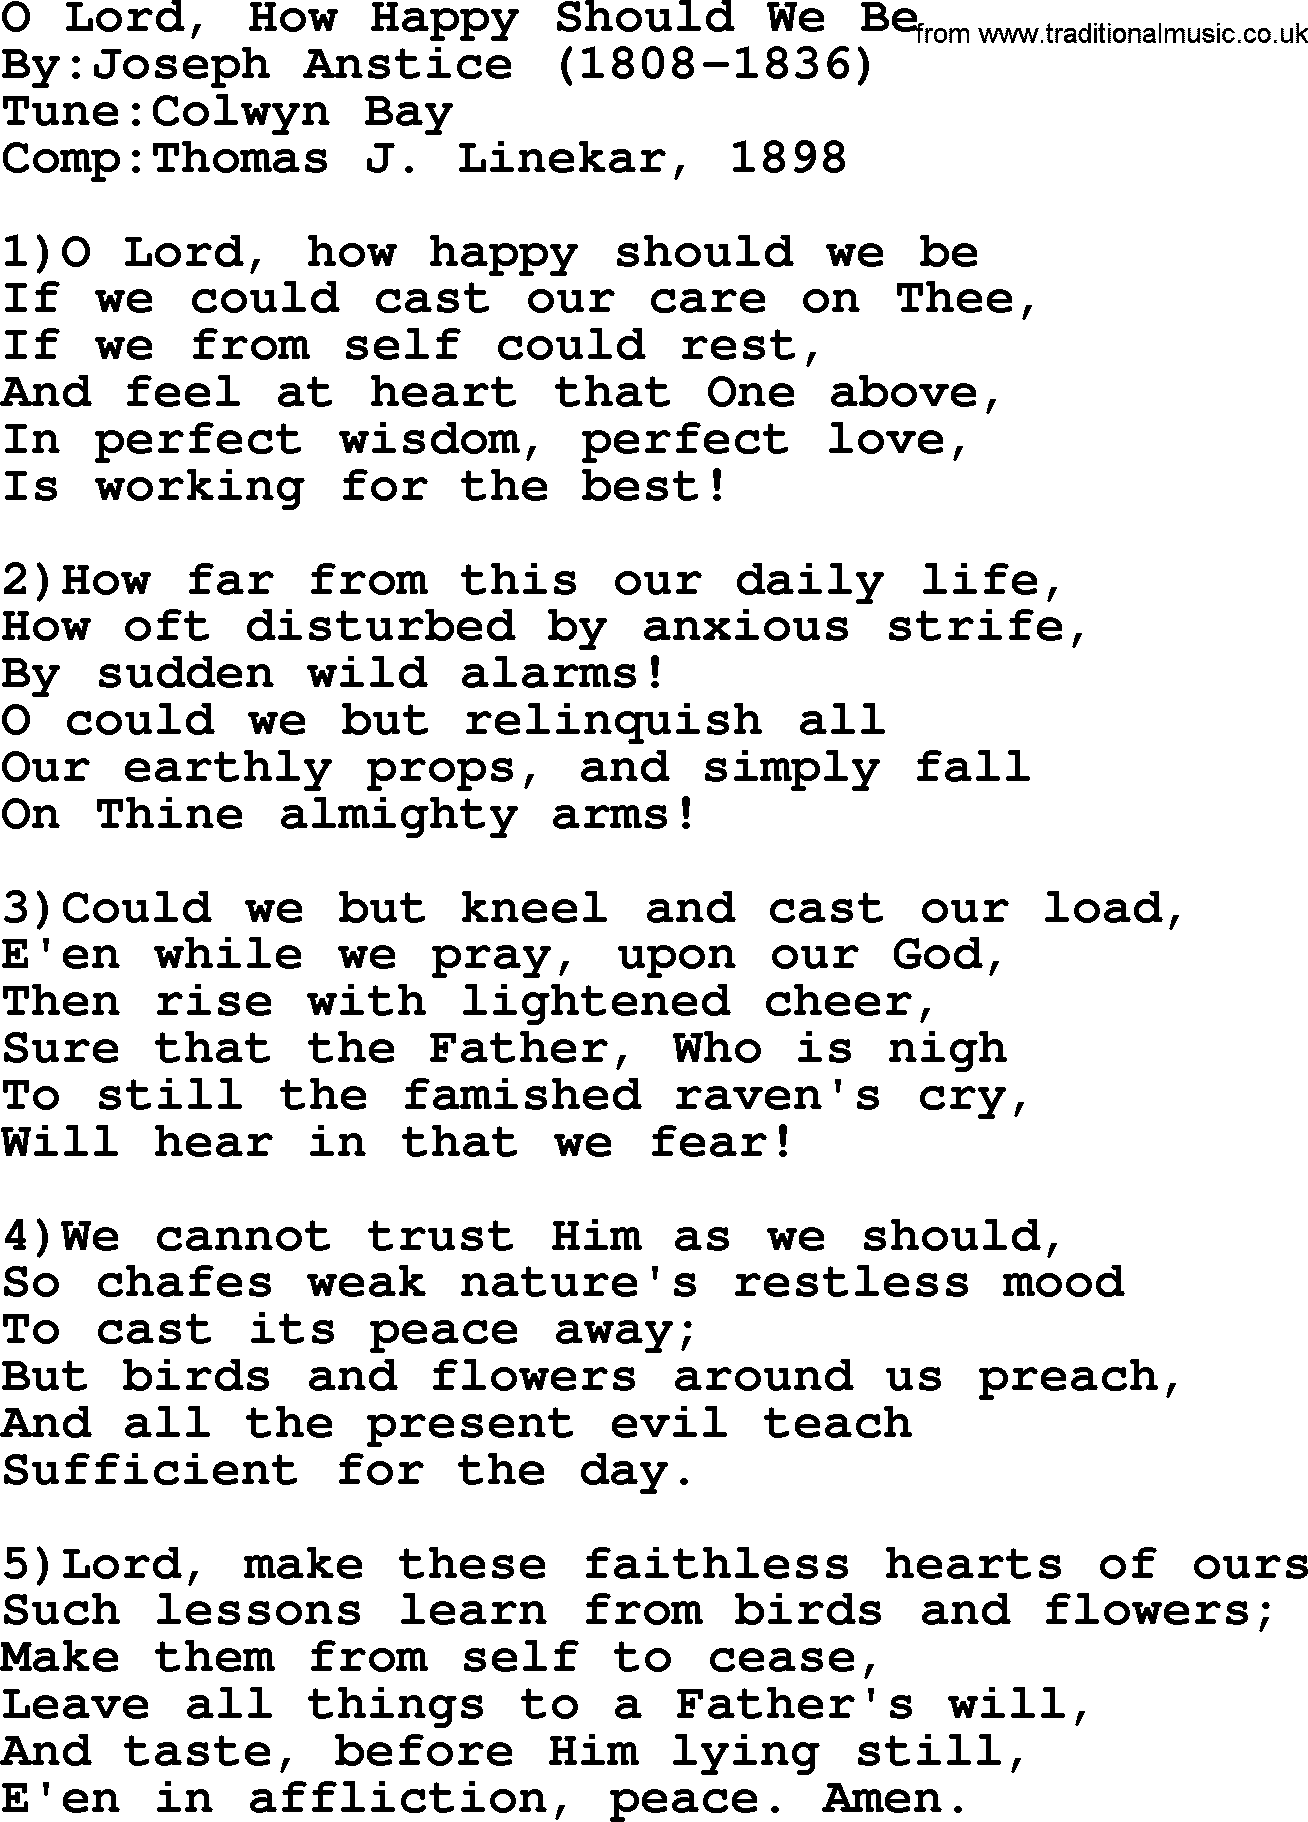 Methodist Hymn: O Lord, How Happy Should We Be, lyrics